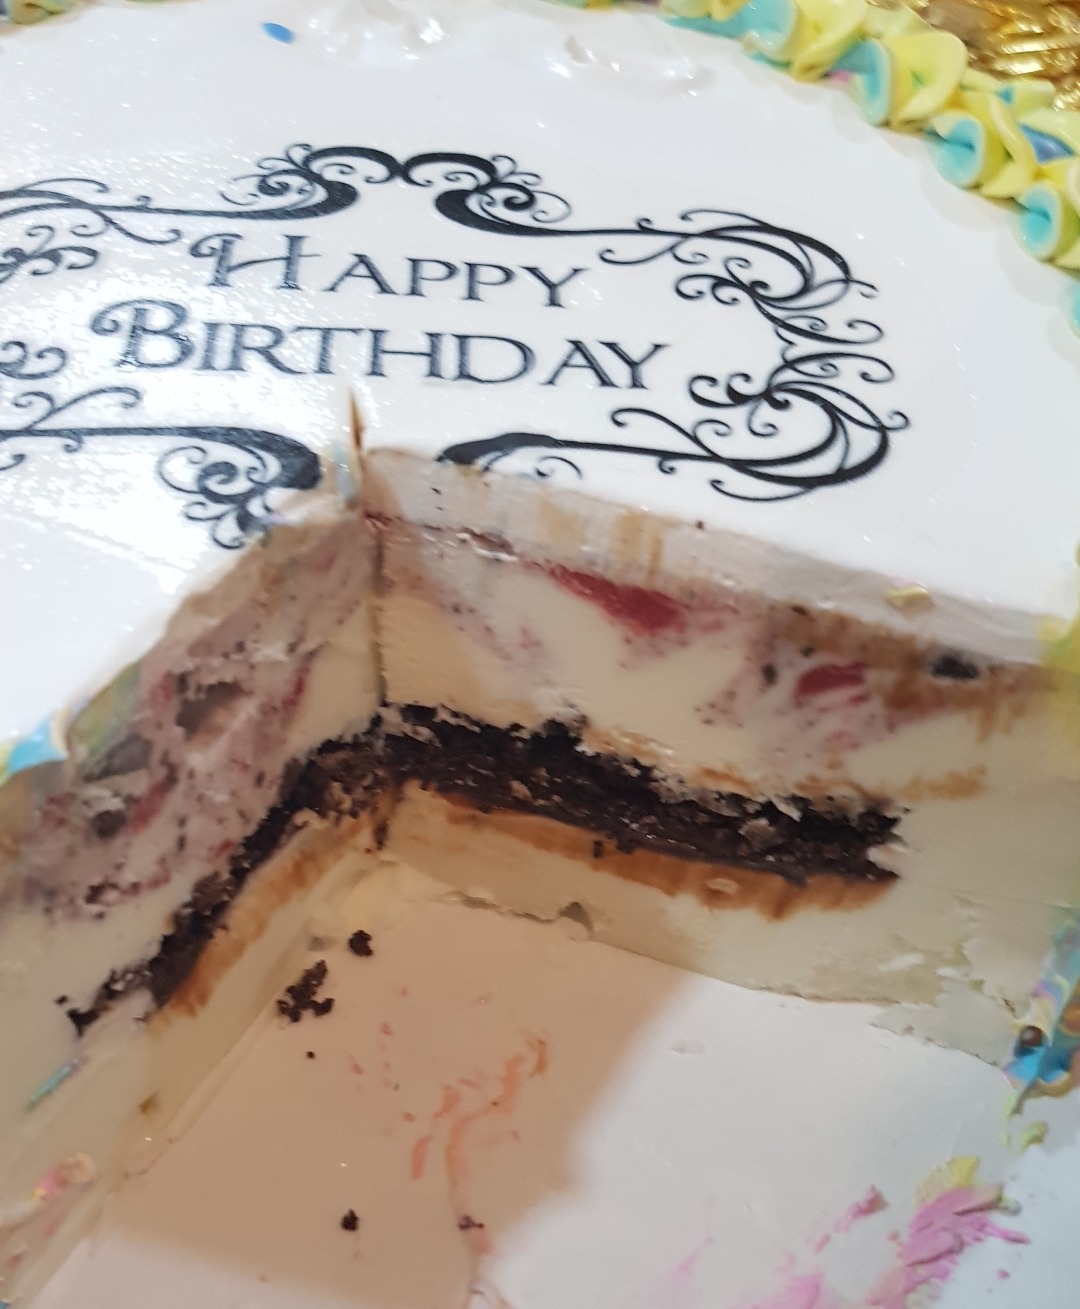 Oreo & strawberry 
#birthday_cake #icecream @ ديري كوين - البحرين